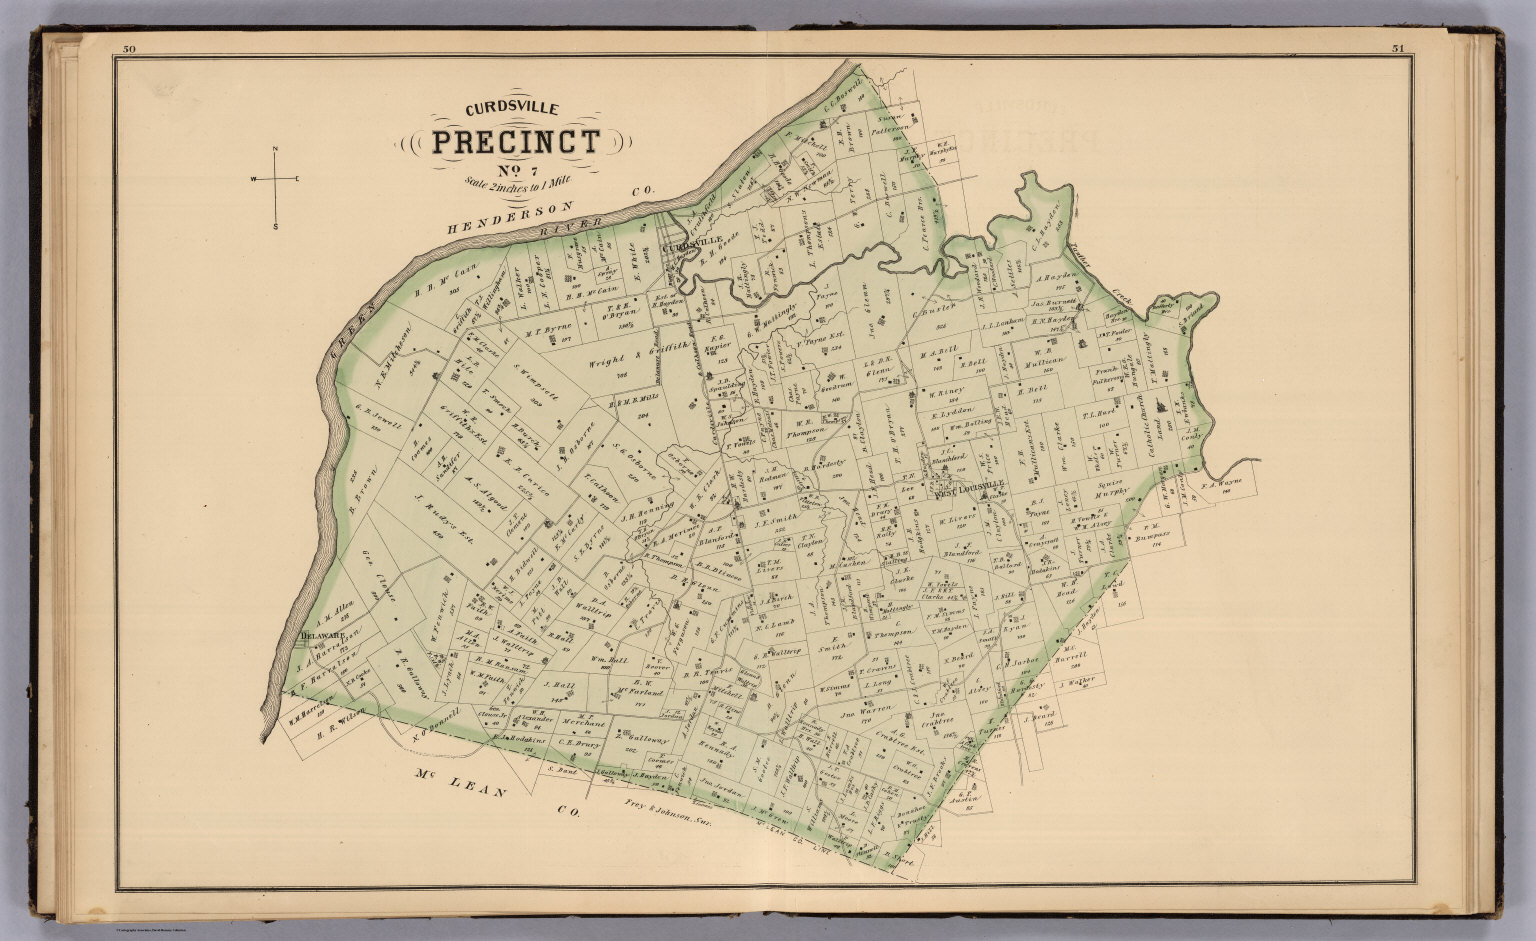 Curdsville Precinct No 7 Daviess County Kentucky David Rumsey Historical Map Collection 7207